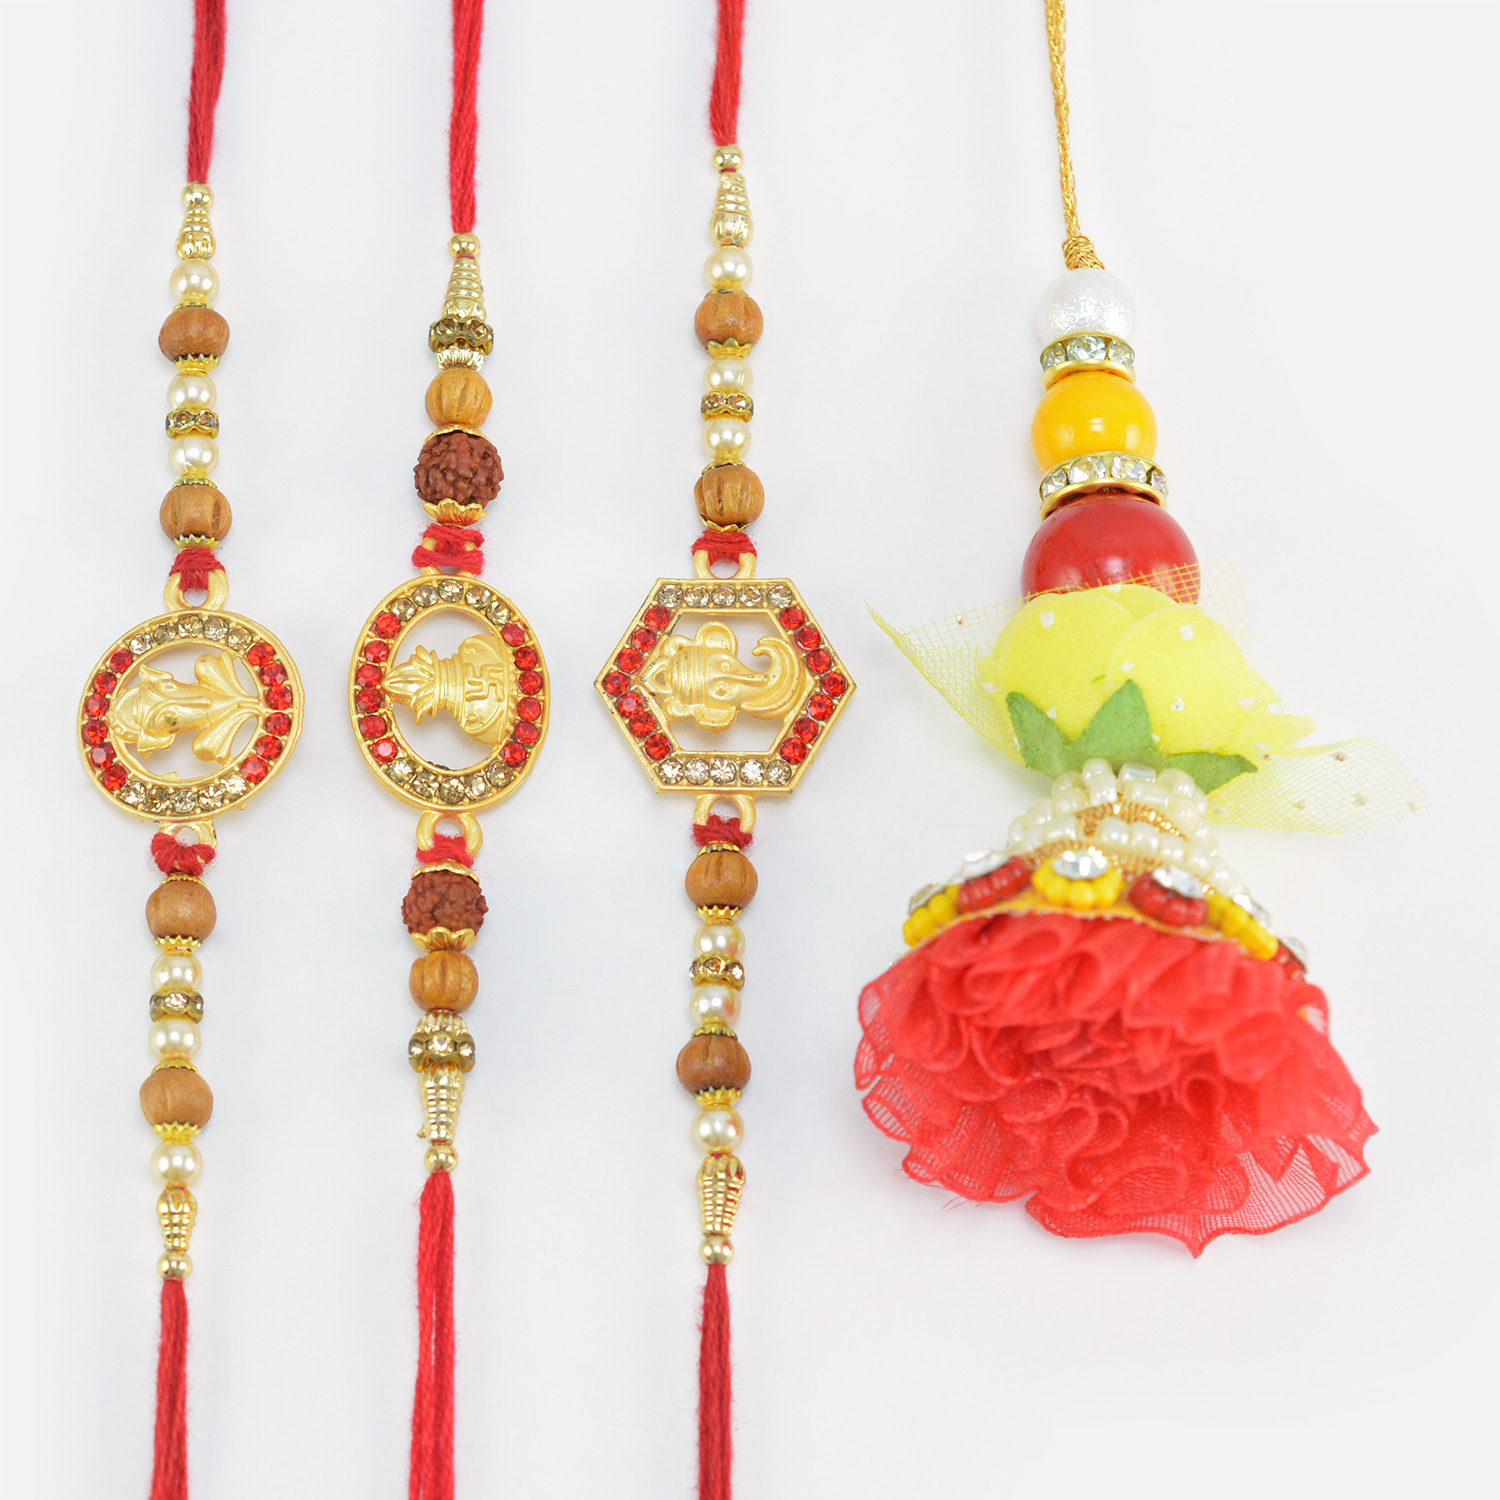 Set of 4 Amazing Rakhis with 3 Sacred Nice Looking Golden Color Brother Rakhis and One Red Lumba Rakhi